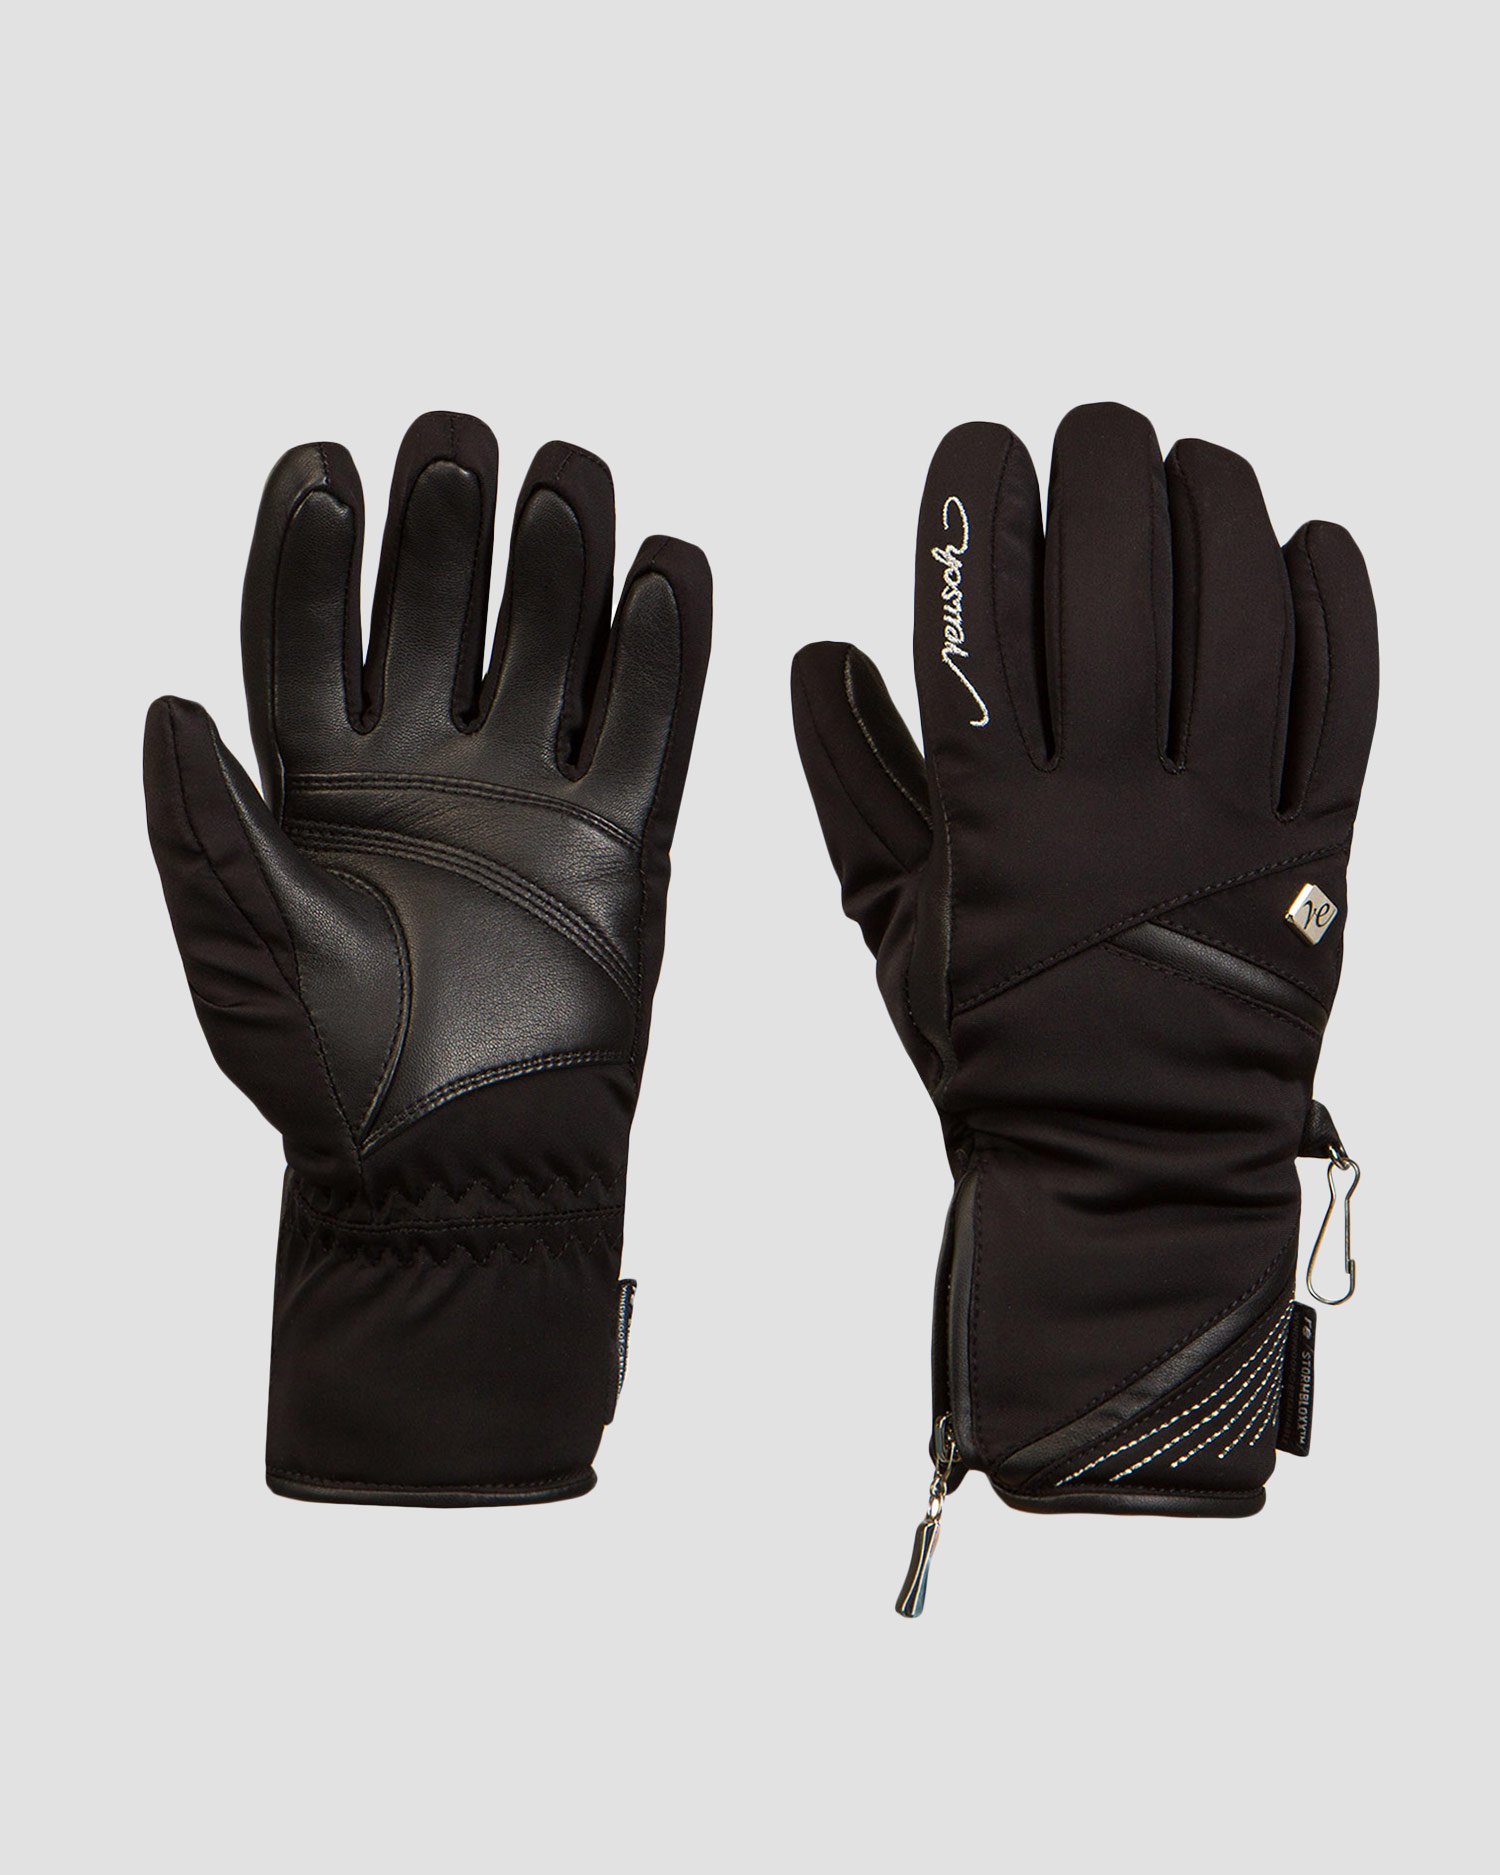 REUSCH Lore Stormbloxx™ gloves 6031102-7702blacksilver | S'portofino